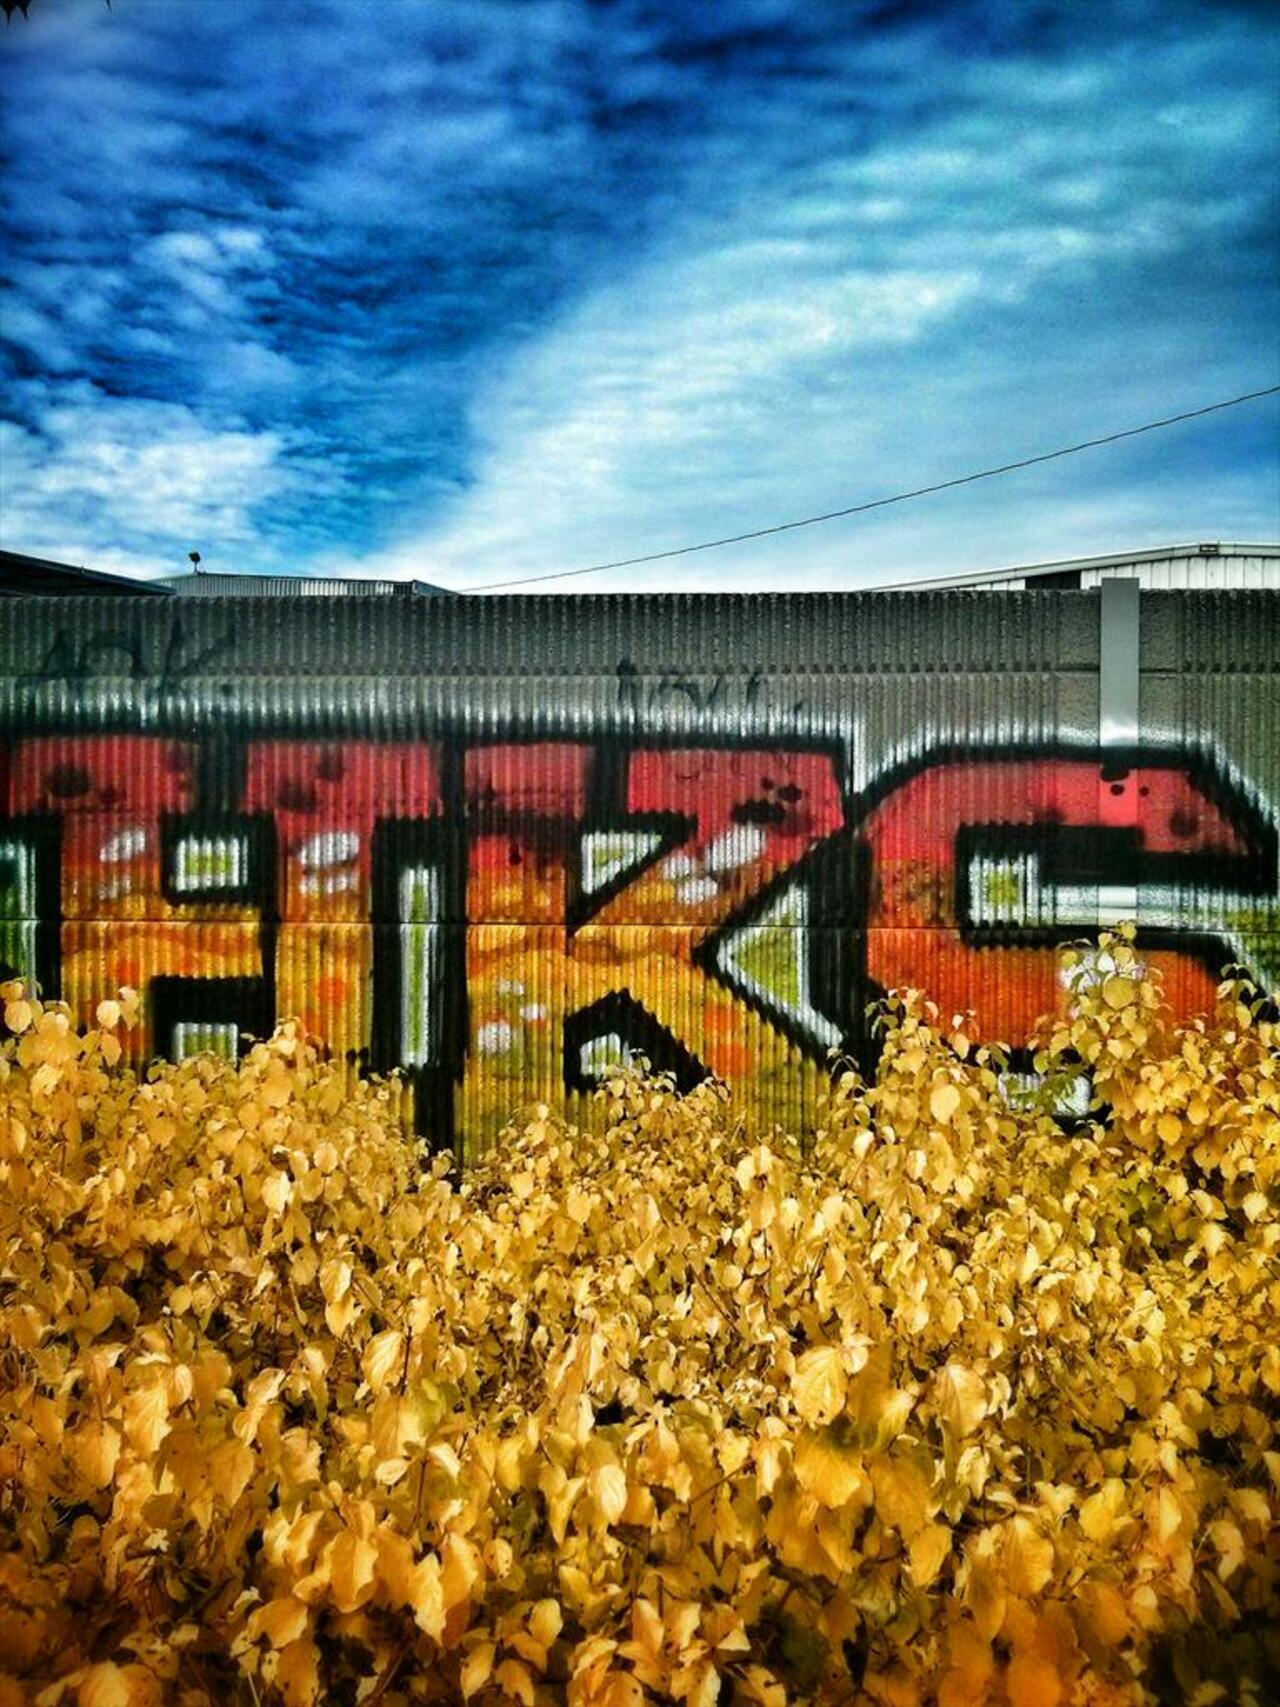 RT @Catjk68: Earlier today...
#streetart #graffiti #urbanart http://t.co/LV89rR8o1C